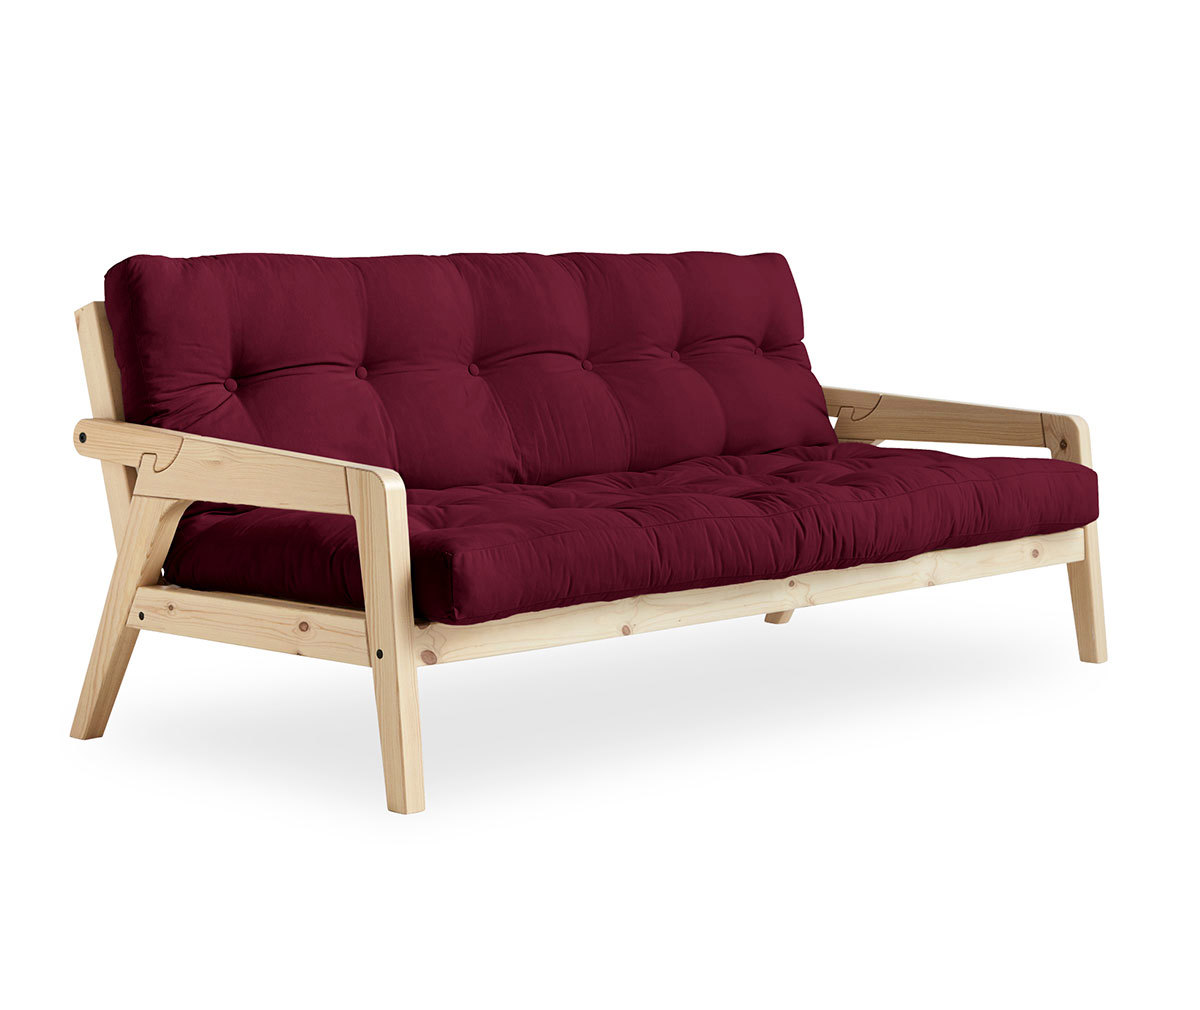 Karup Design Grab-futonsohva bordeaux/mänty, L 200 cm